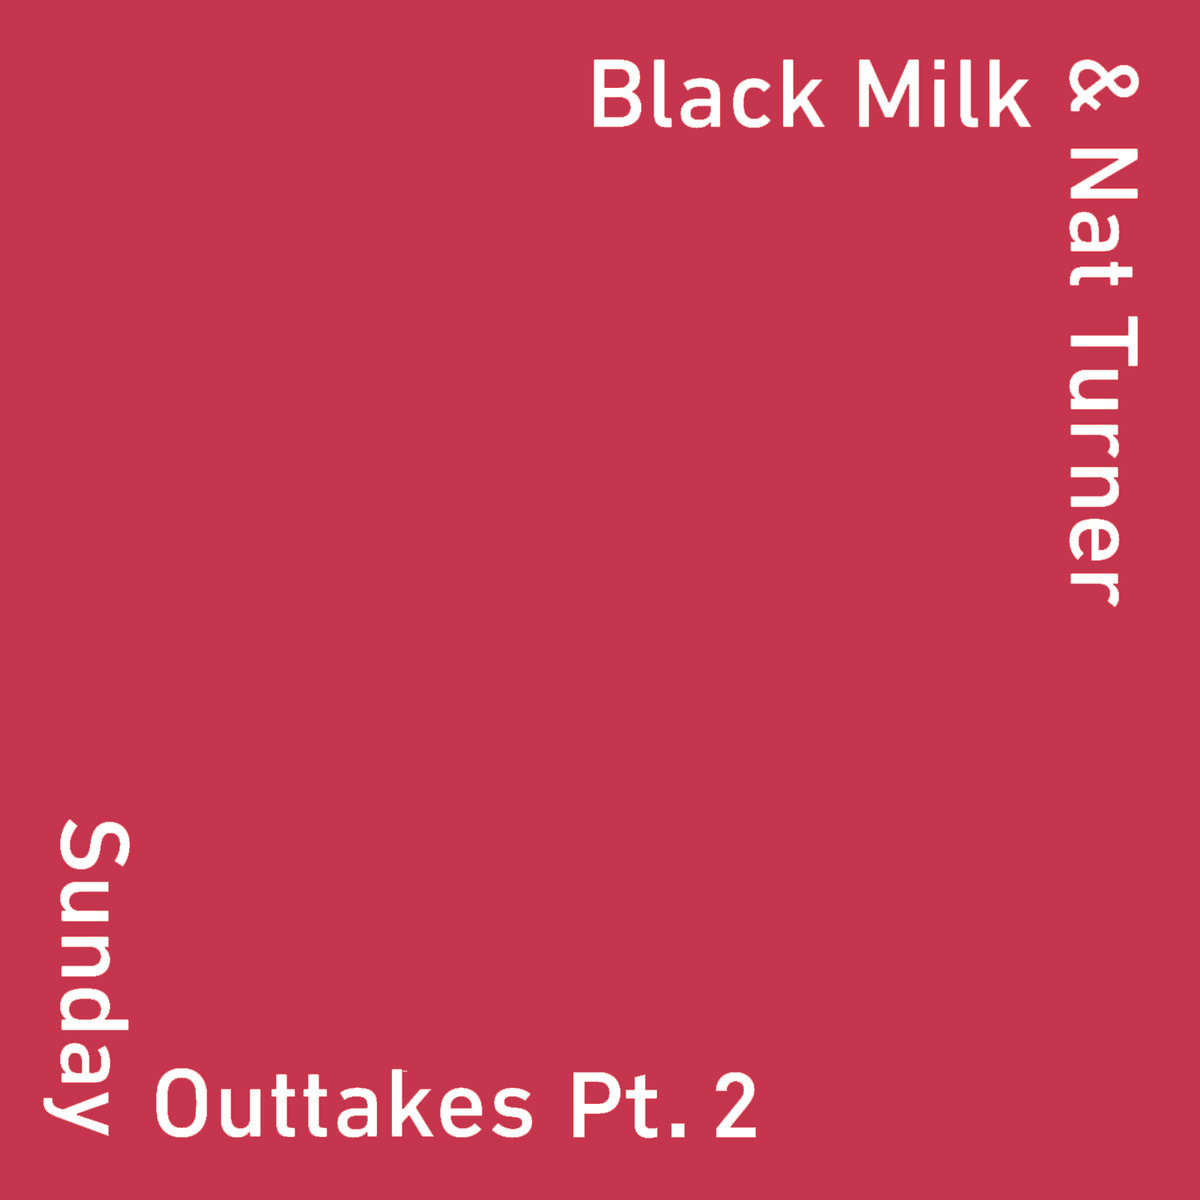 Black Milk & Nat Turner - "Sunday Outtakes Pt. 2" (Release)